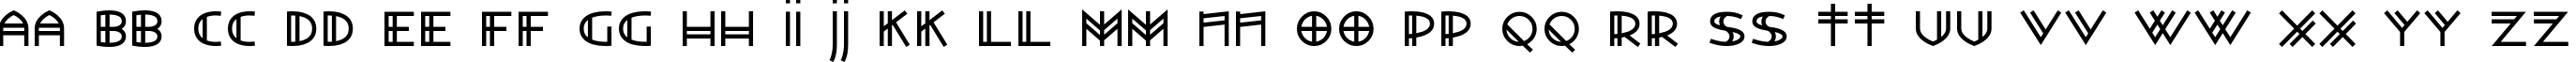 Пример написания английского алфавита шрифтом Watertown Alternate